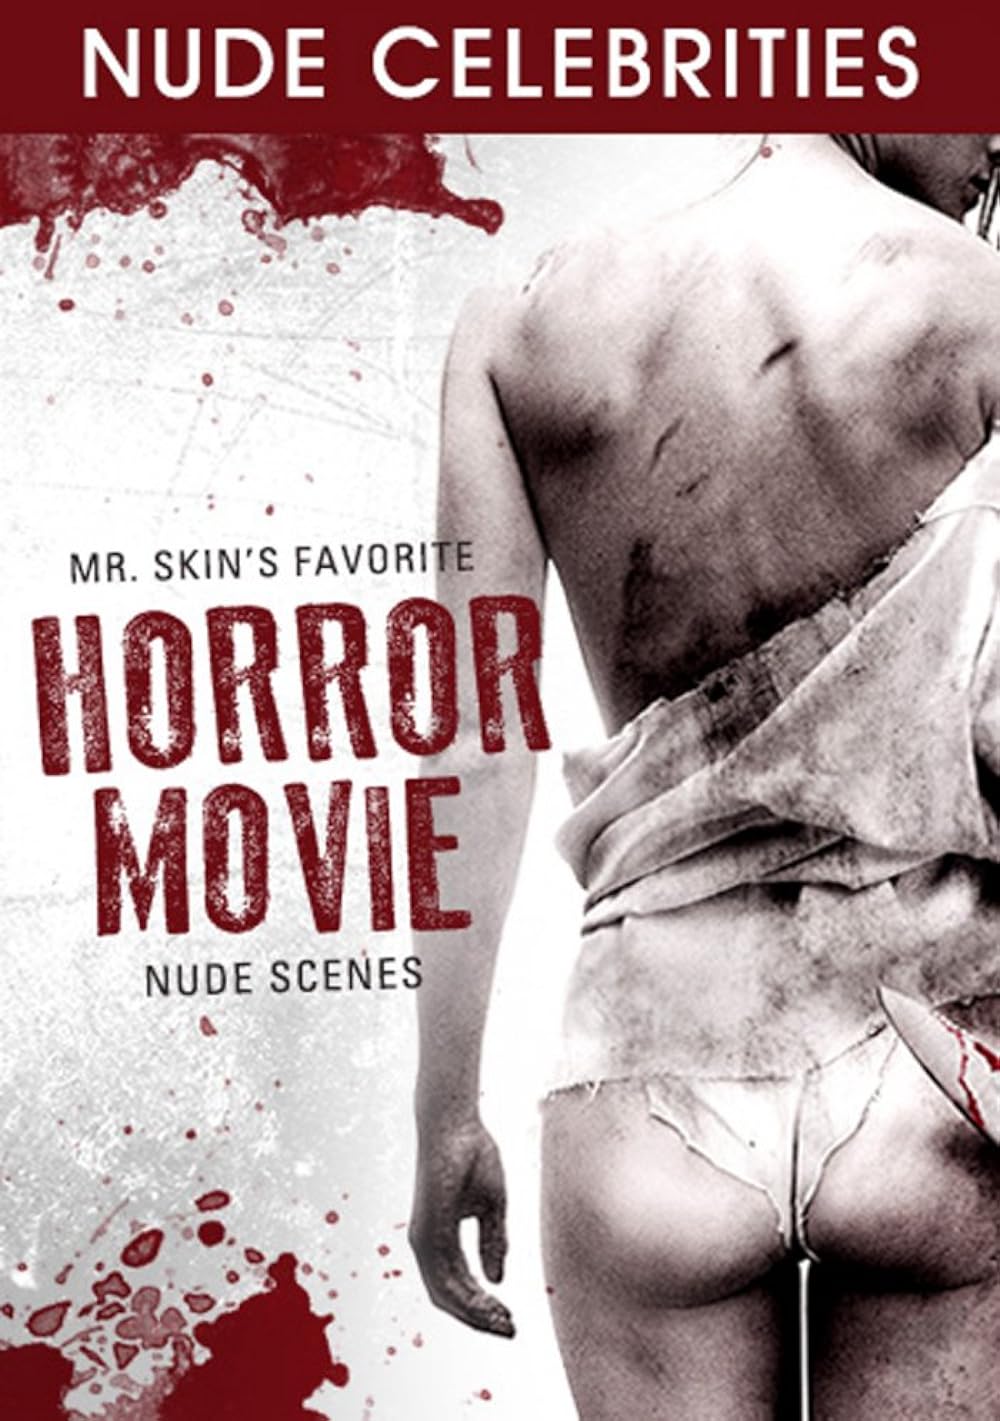 craig trent recommends horror movie nudes pic